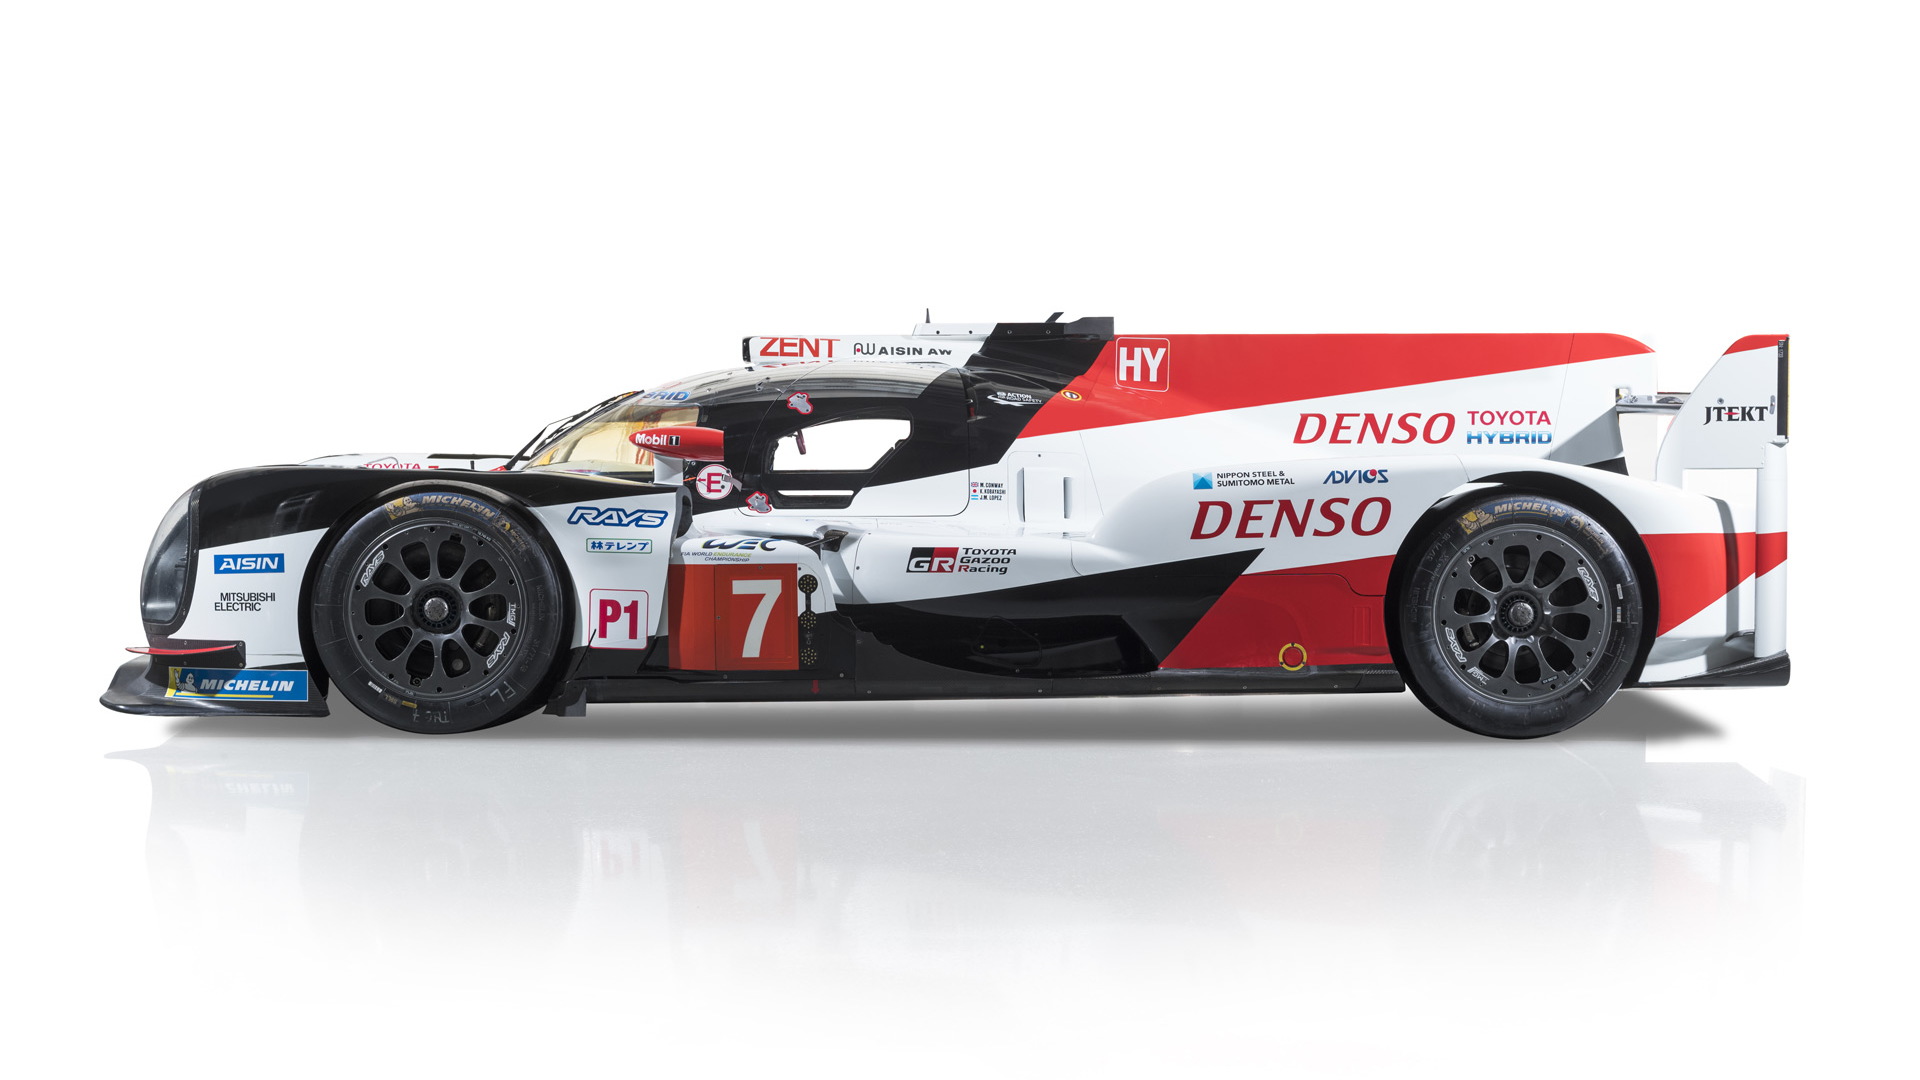 2018/2019 Toyota TS050 Hybrid LMP1 ready to take on Le Mans